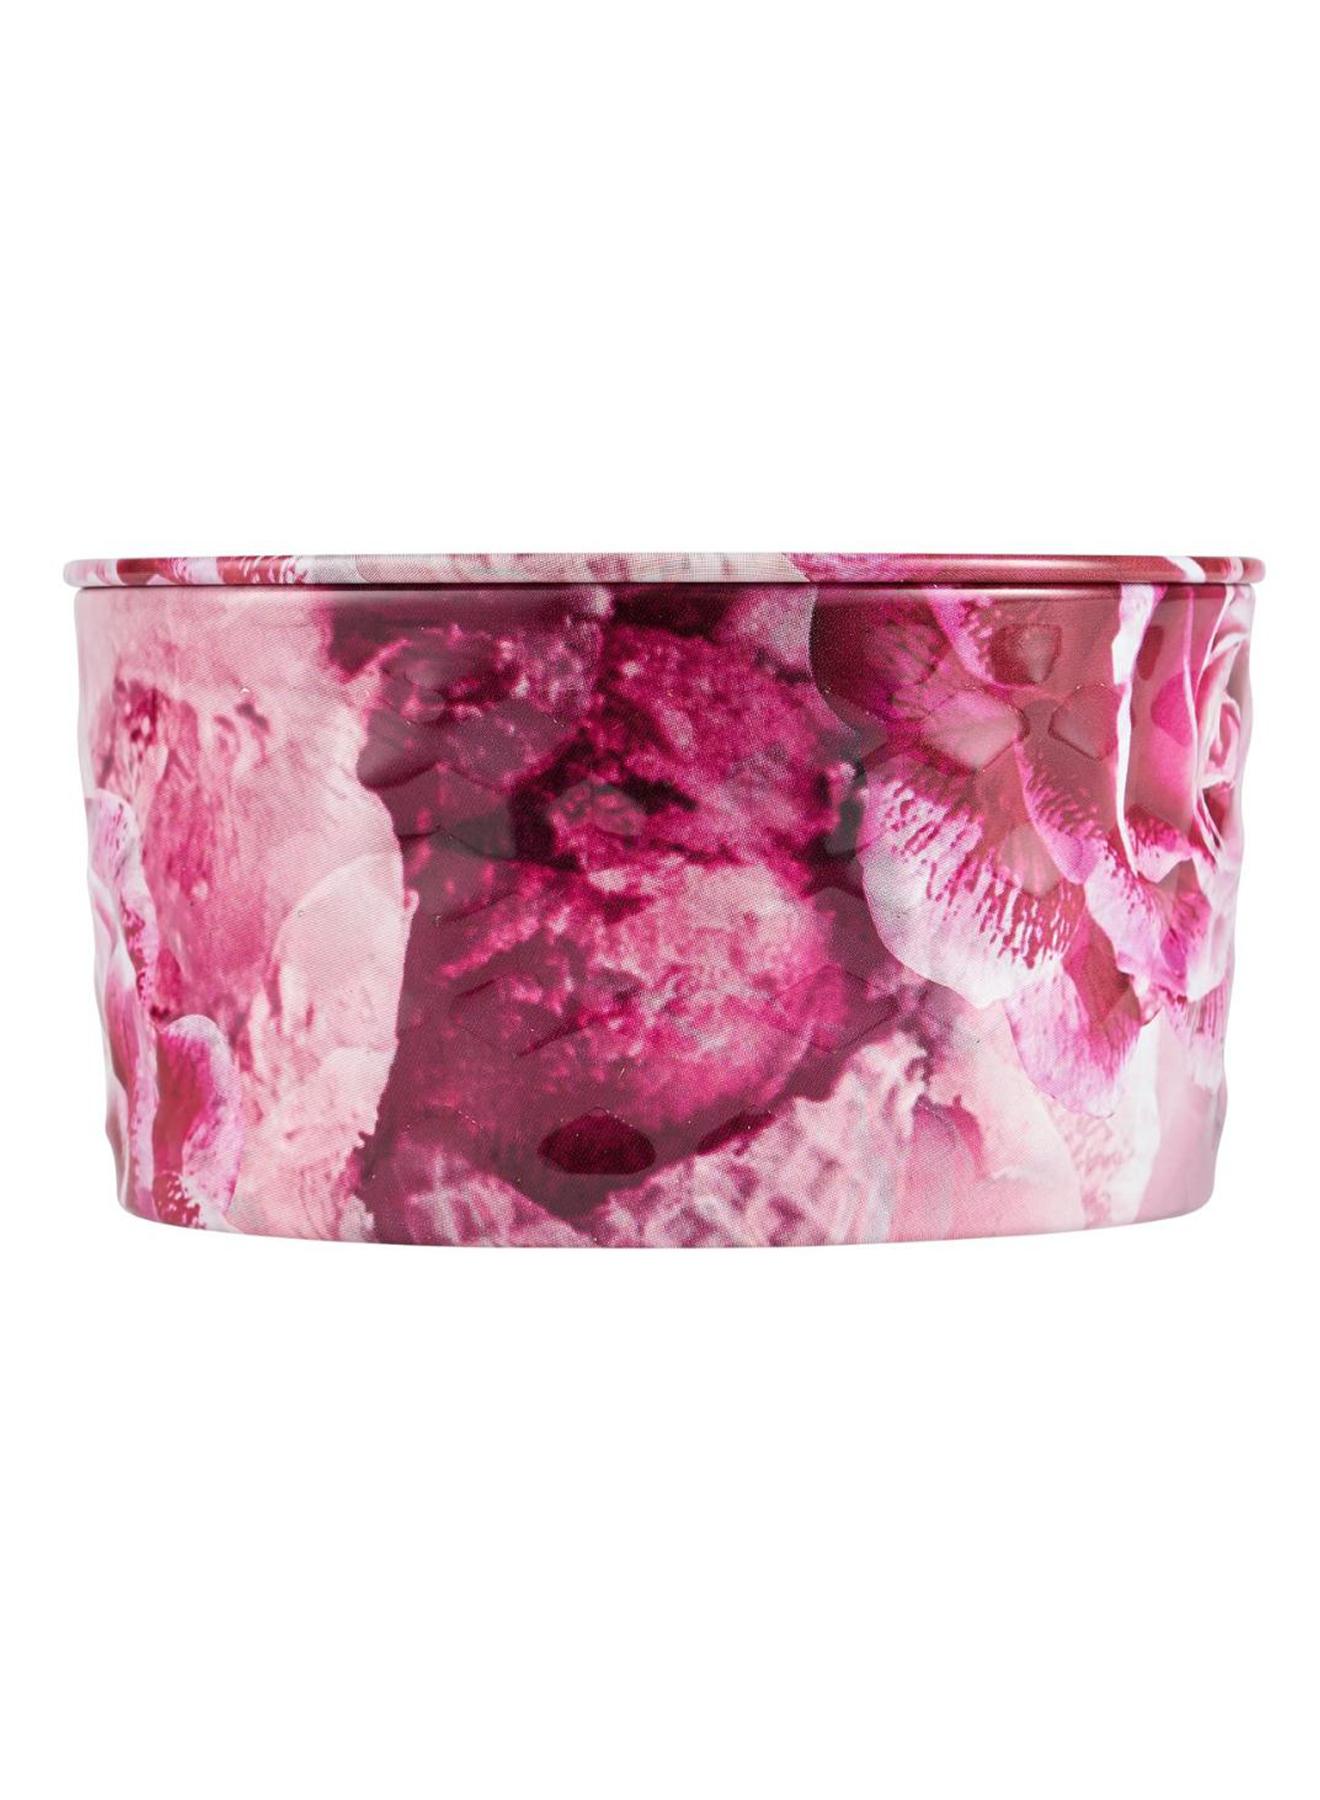 Rose petal ice cream 2 wick tin candle - 3